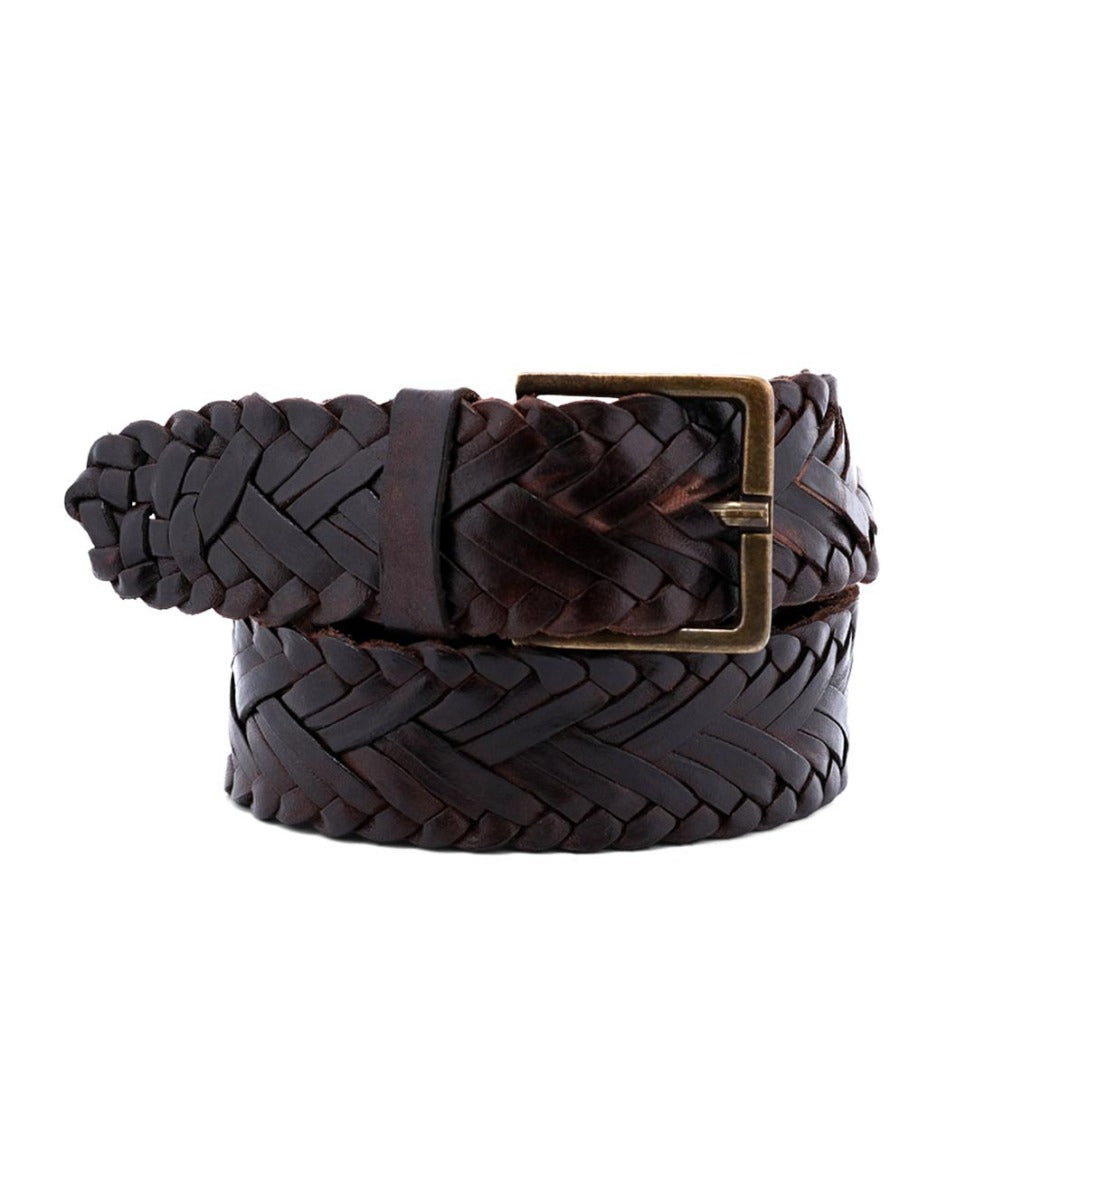 A brown Bed Stu Proem braided belt with a metal buckle.